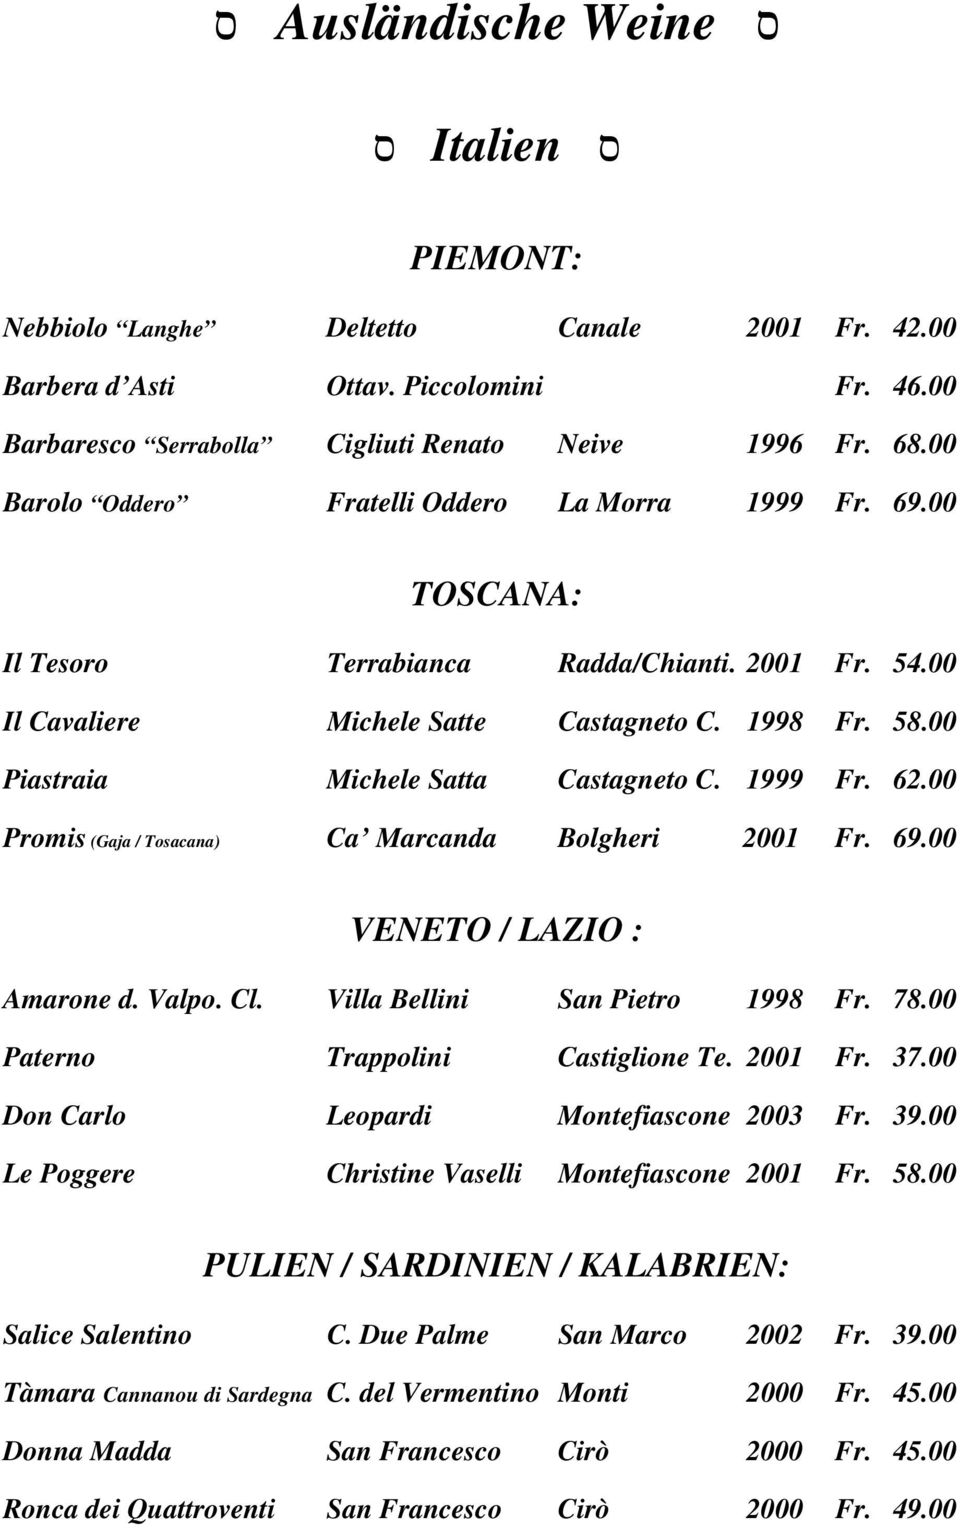 00 Piastraia Michele Satta Castagneto C. 1999 Fr. 62.00 Promis (Gaja / Tosacana) Ca Marcanda Bolgheri 2001 Fr. 69.00 VENETO / LAZIO : Amarone d. Valpo. Cl. Villa Bellini San Pietro 1998 Fr. 78.